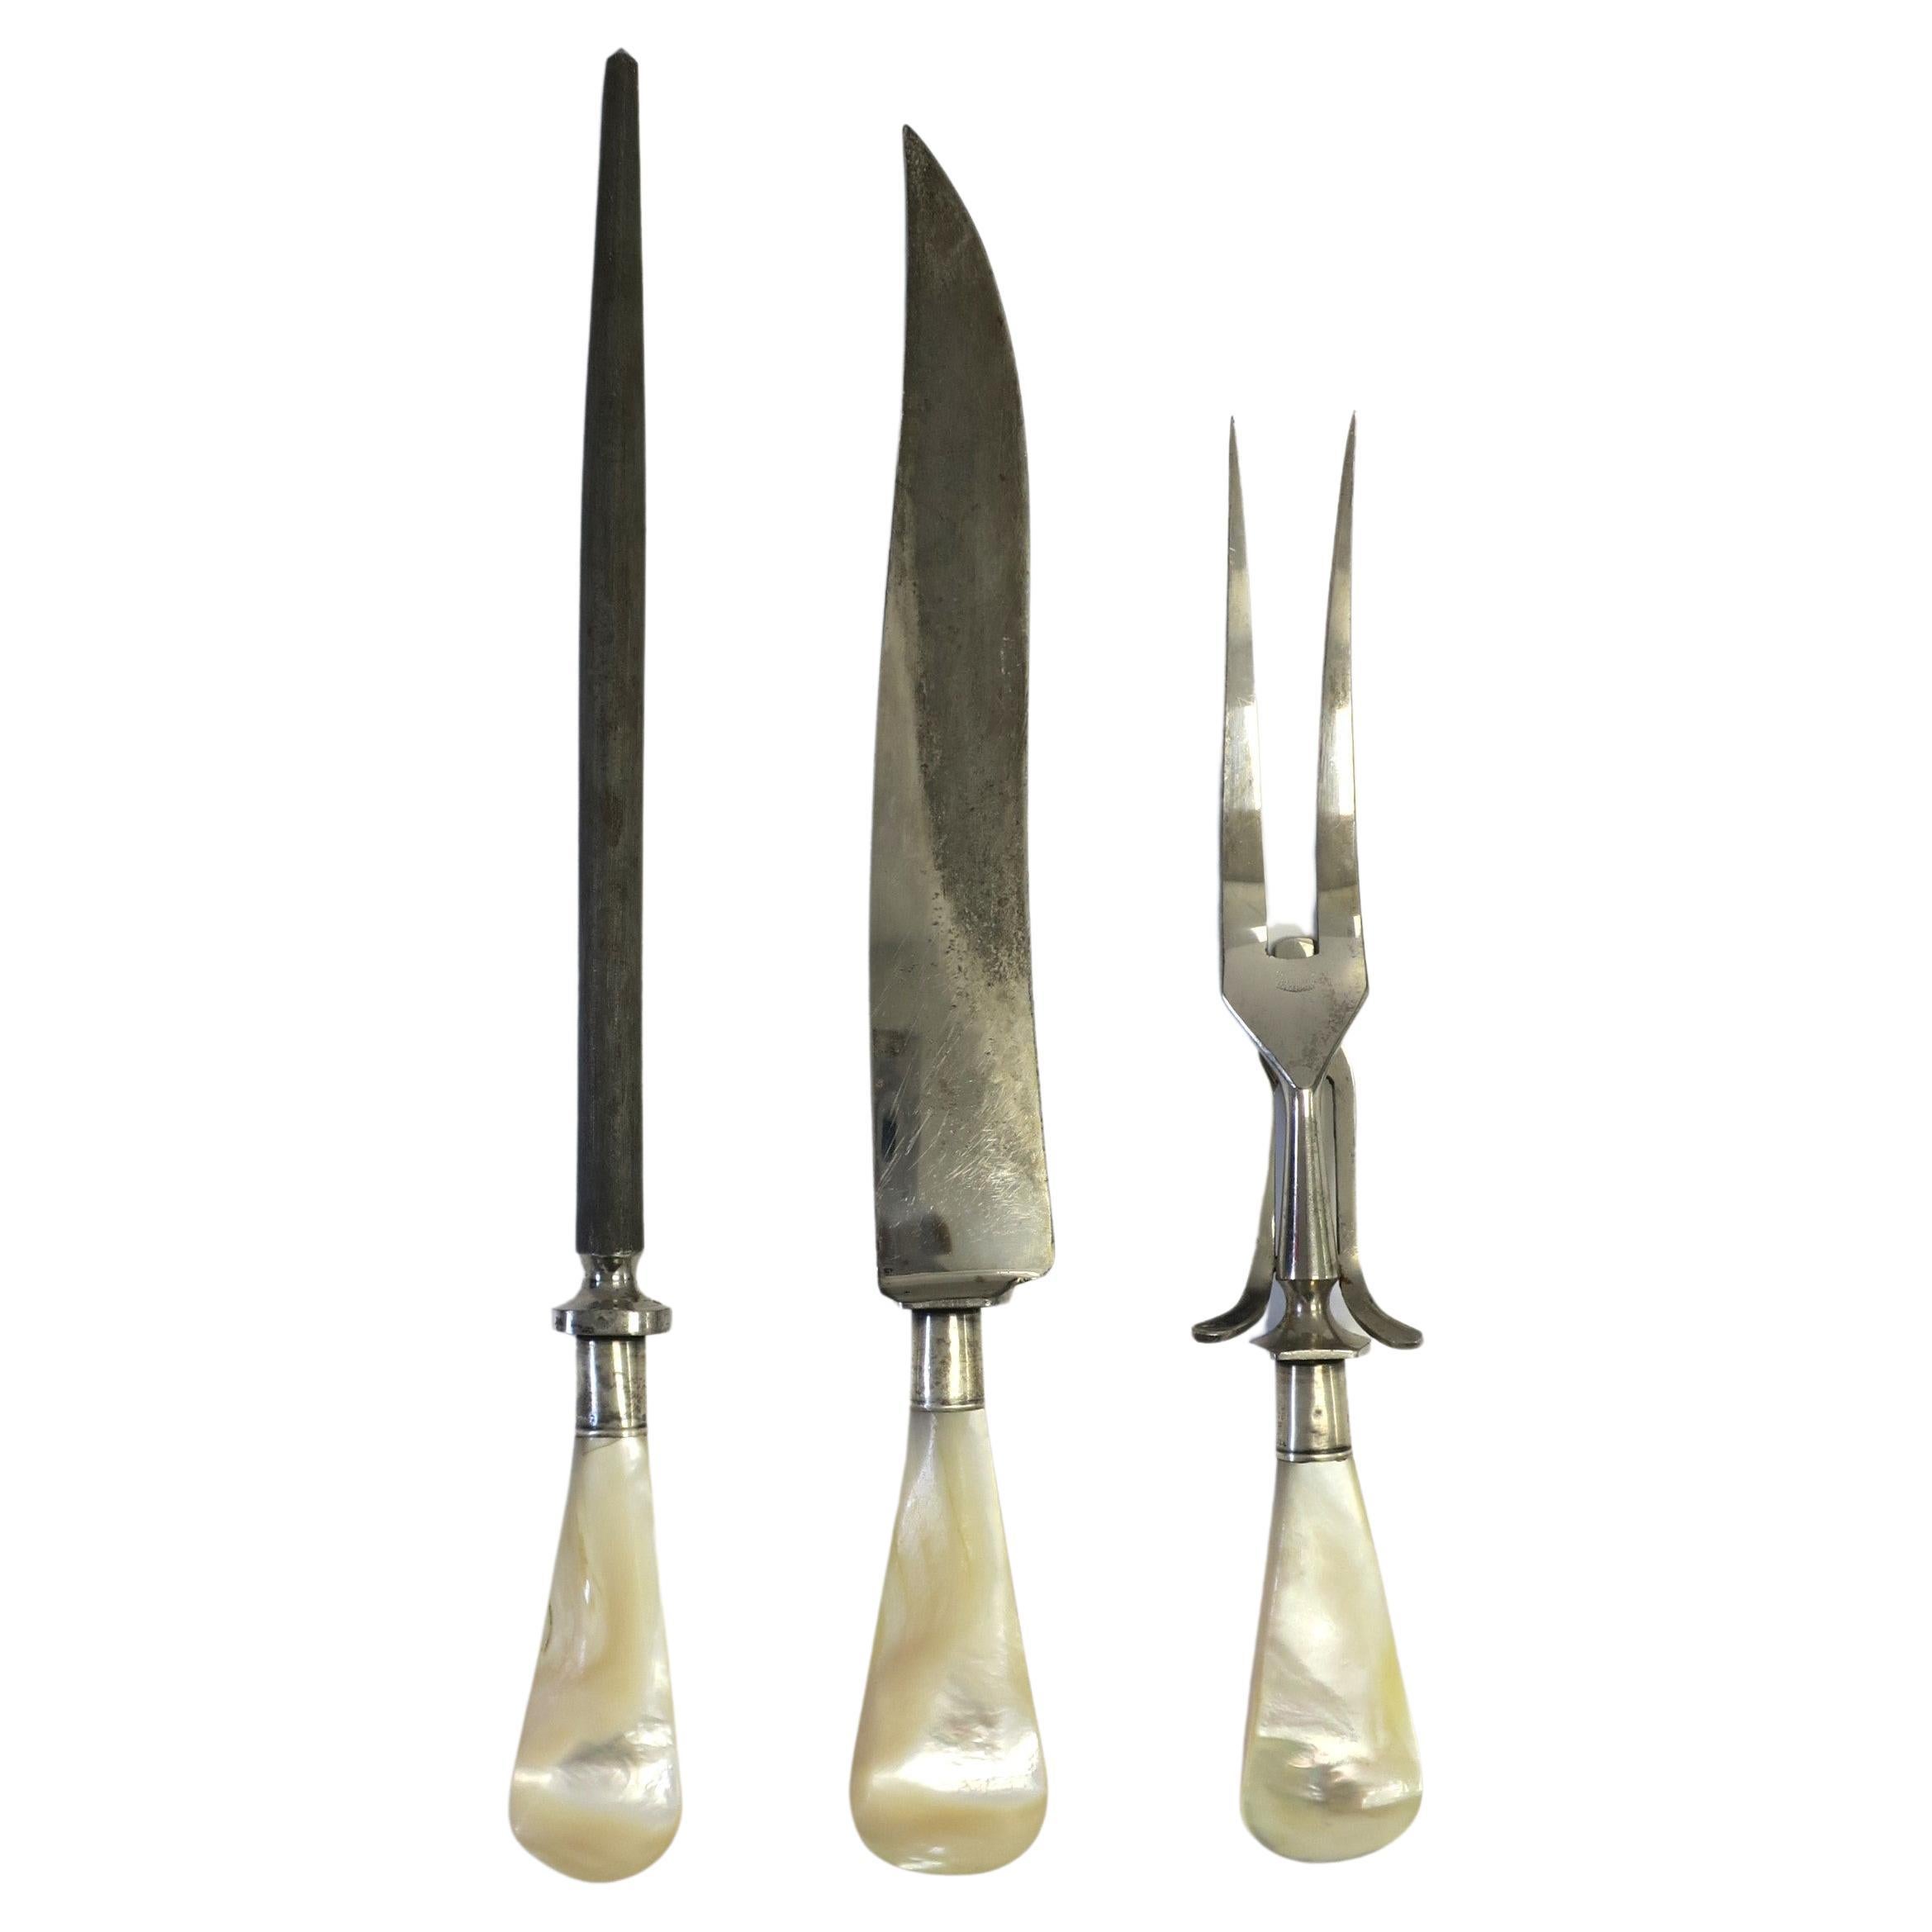 https://a.1stdibscdn.com/german-stainless-steel-knife-fork-carving-set-mother-of-pearl-handles-set-of-3-for-sale/f_13142/f_311958121667825991664/f_31195812_1667825992260_bg_processed.jpg